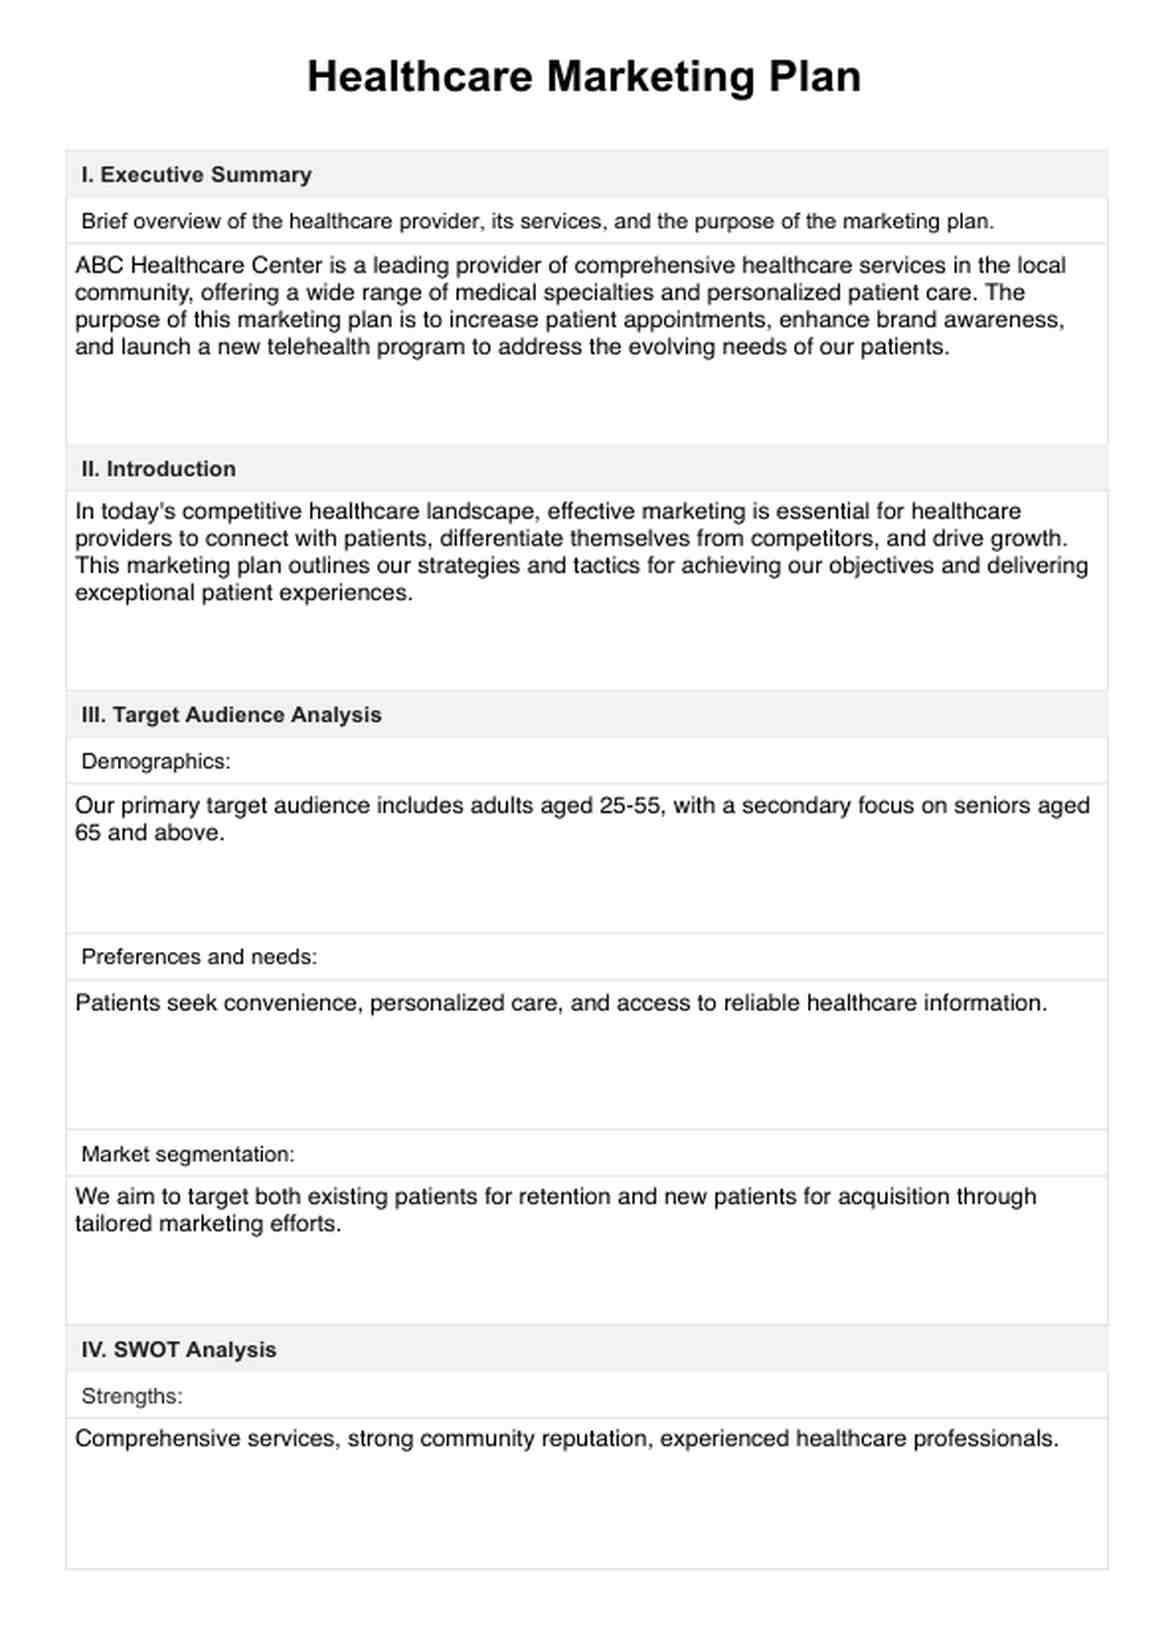 Healthcare Marketing Plan PDF Example